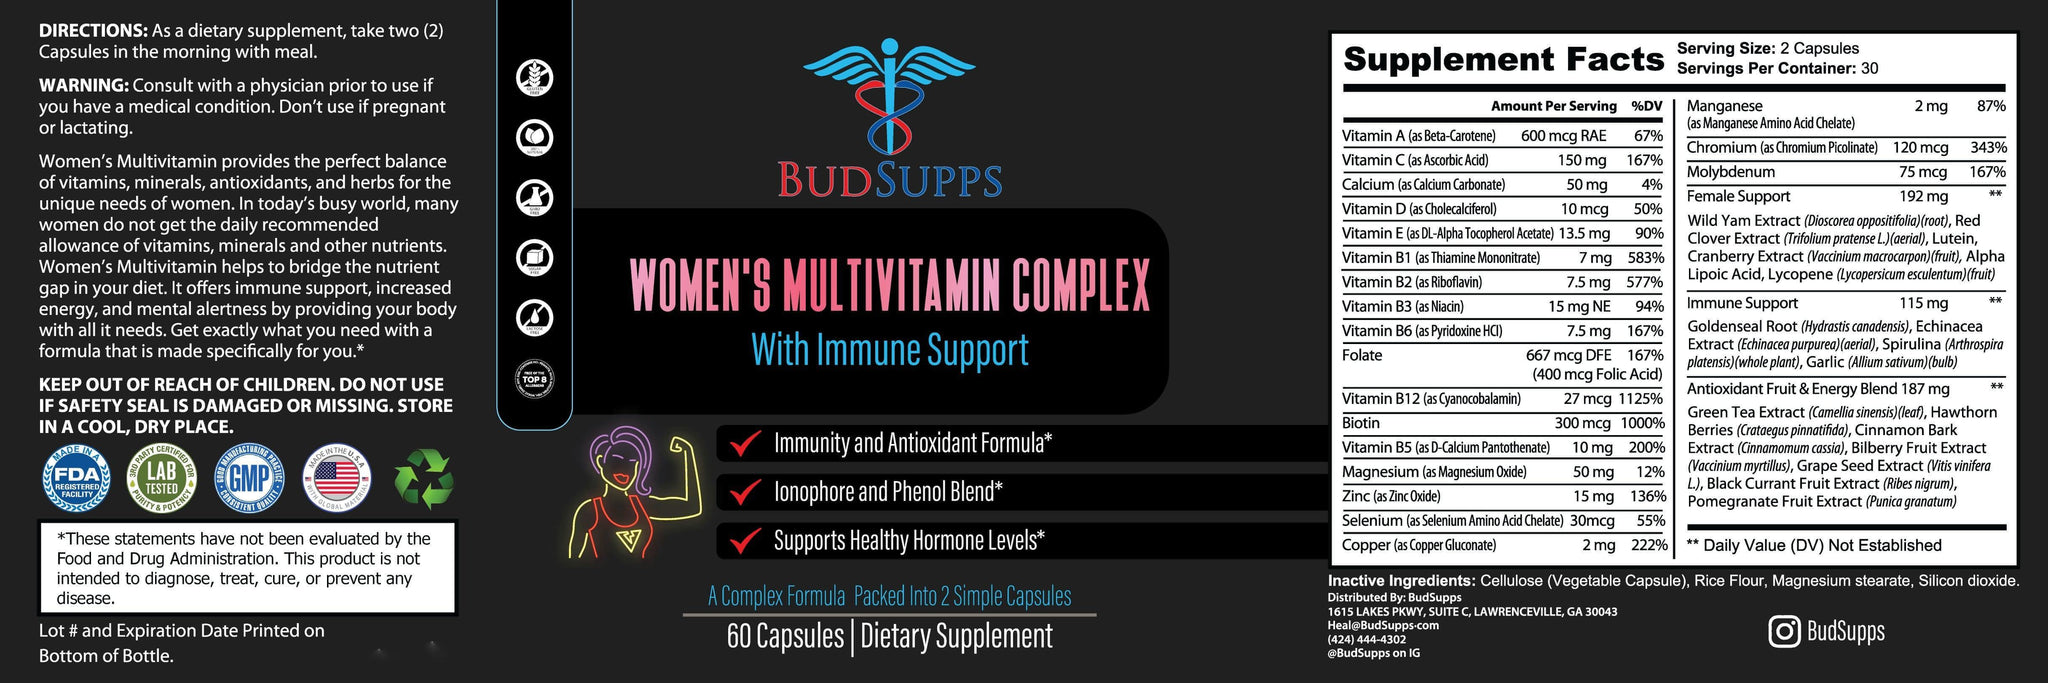 Women's Multivitamin Complex (with Immune Support)